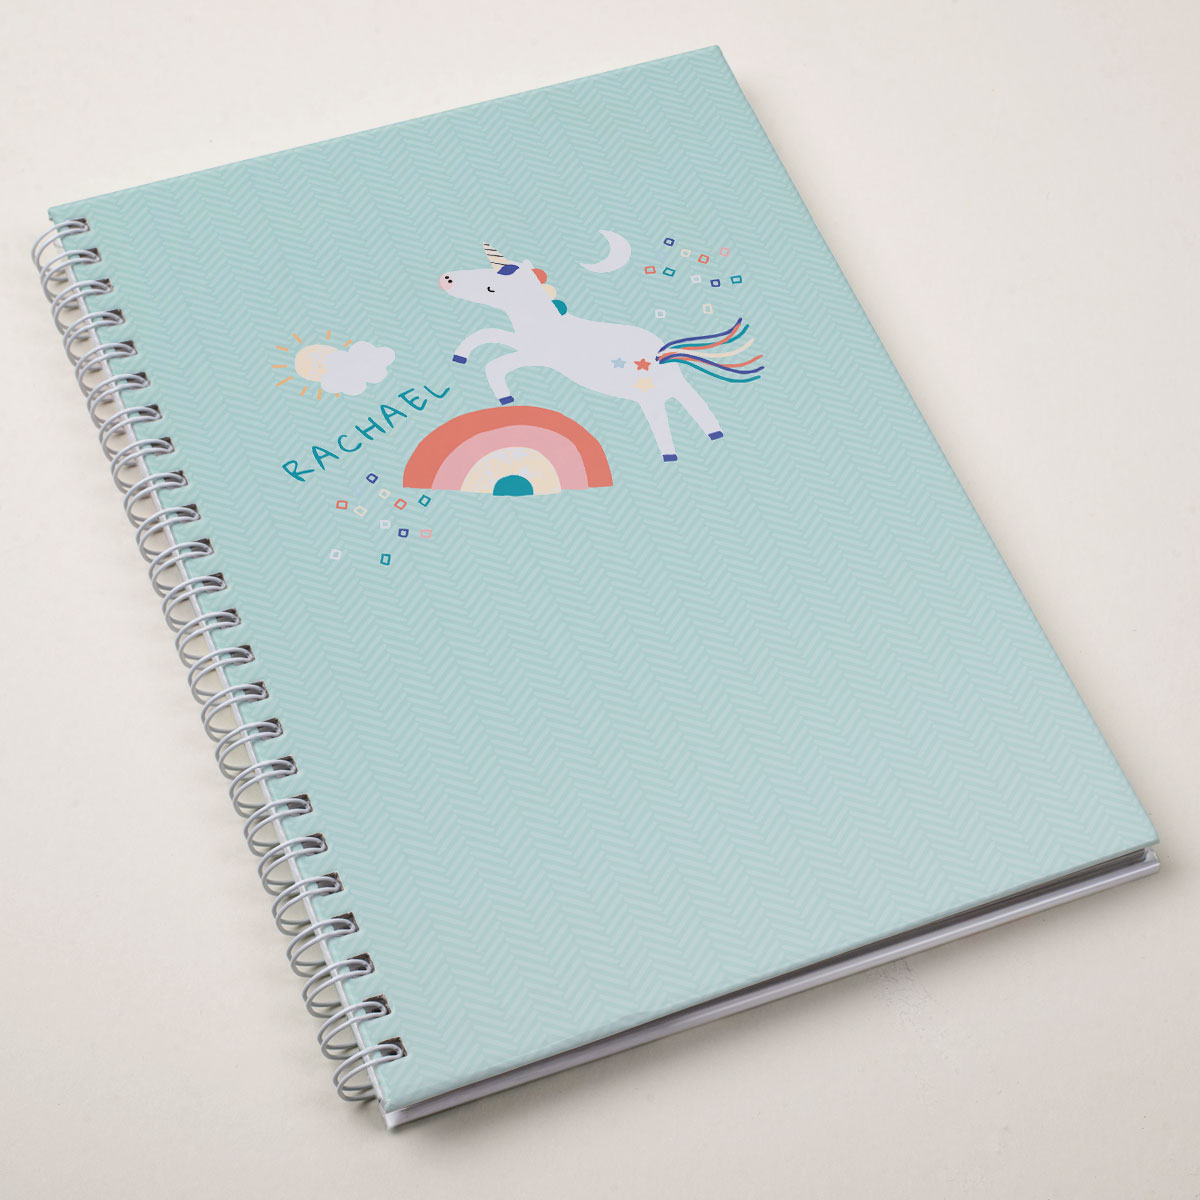 Personalised Notebook - Unicorn Rainbow